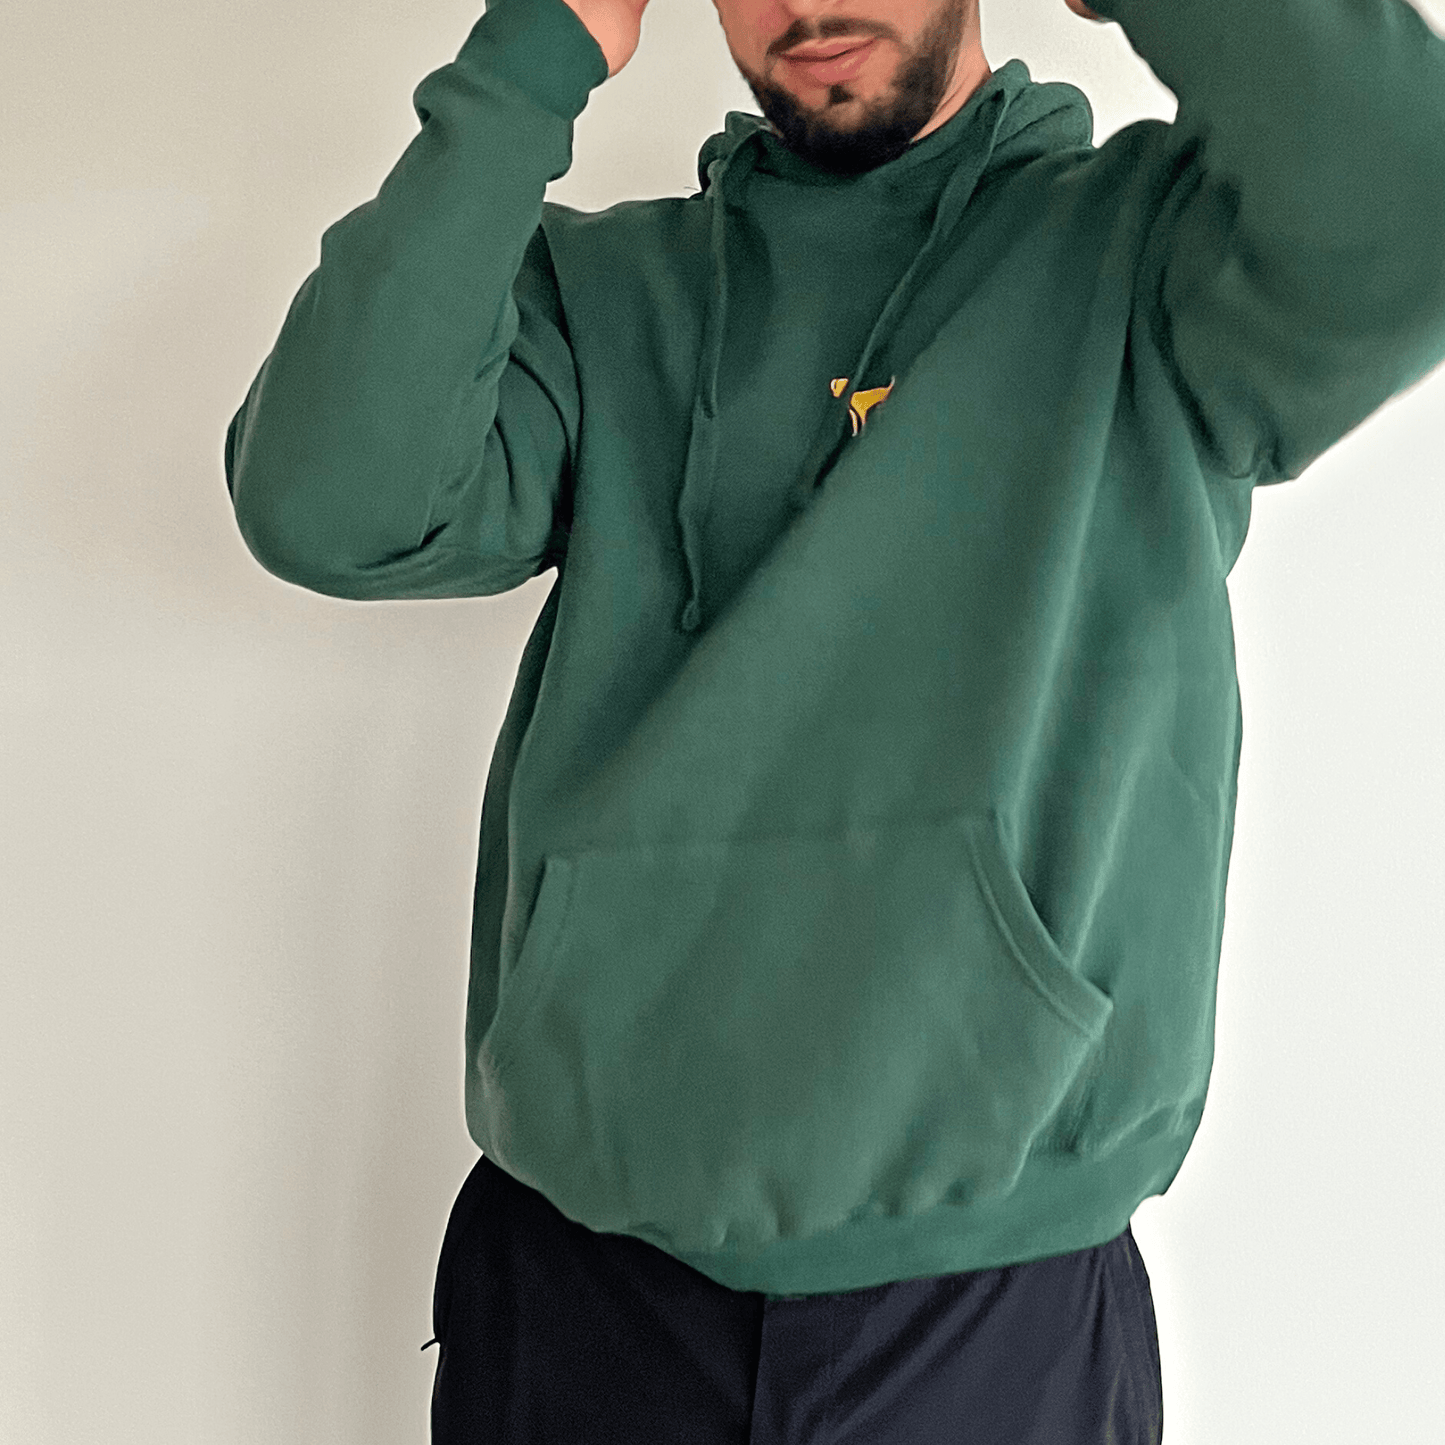 Lokaal basics everyday lounging hoodie, green, cream, sand, navy, hoodie, sweater, unisex, apparel